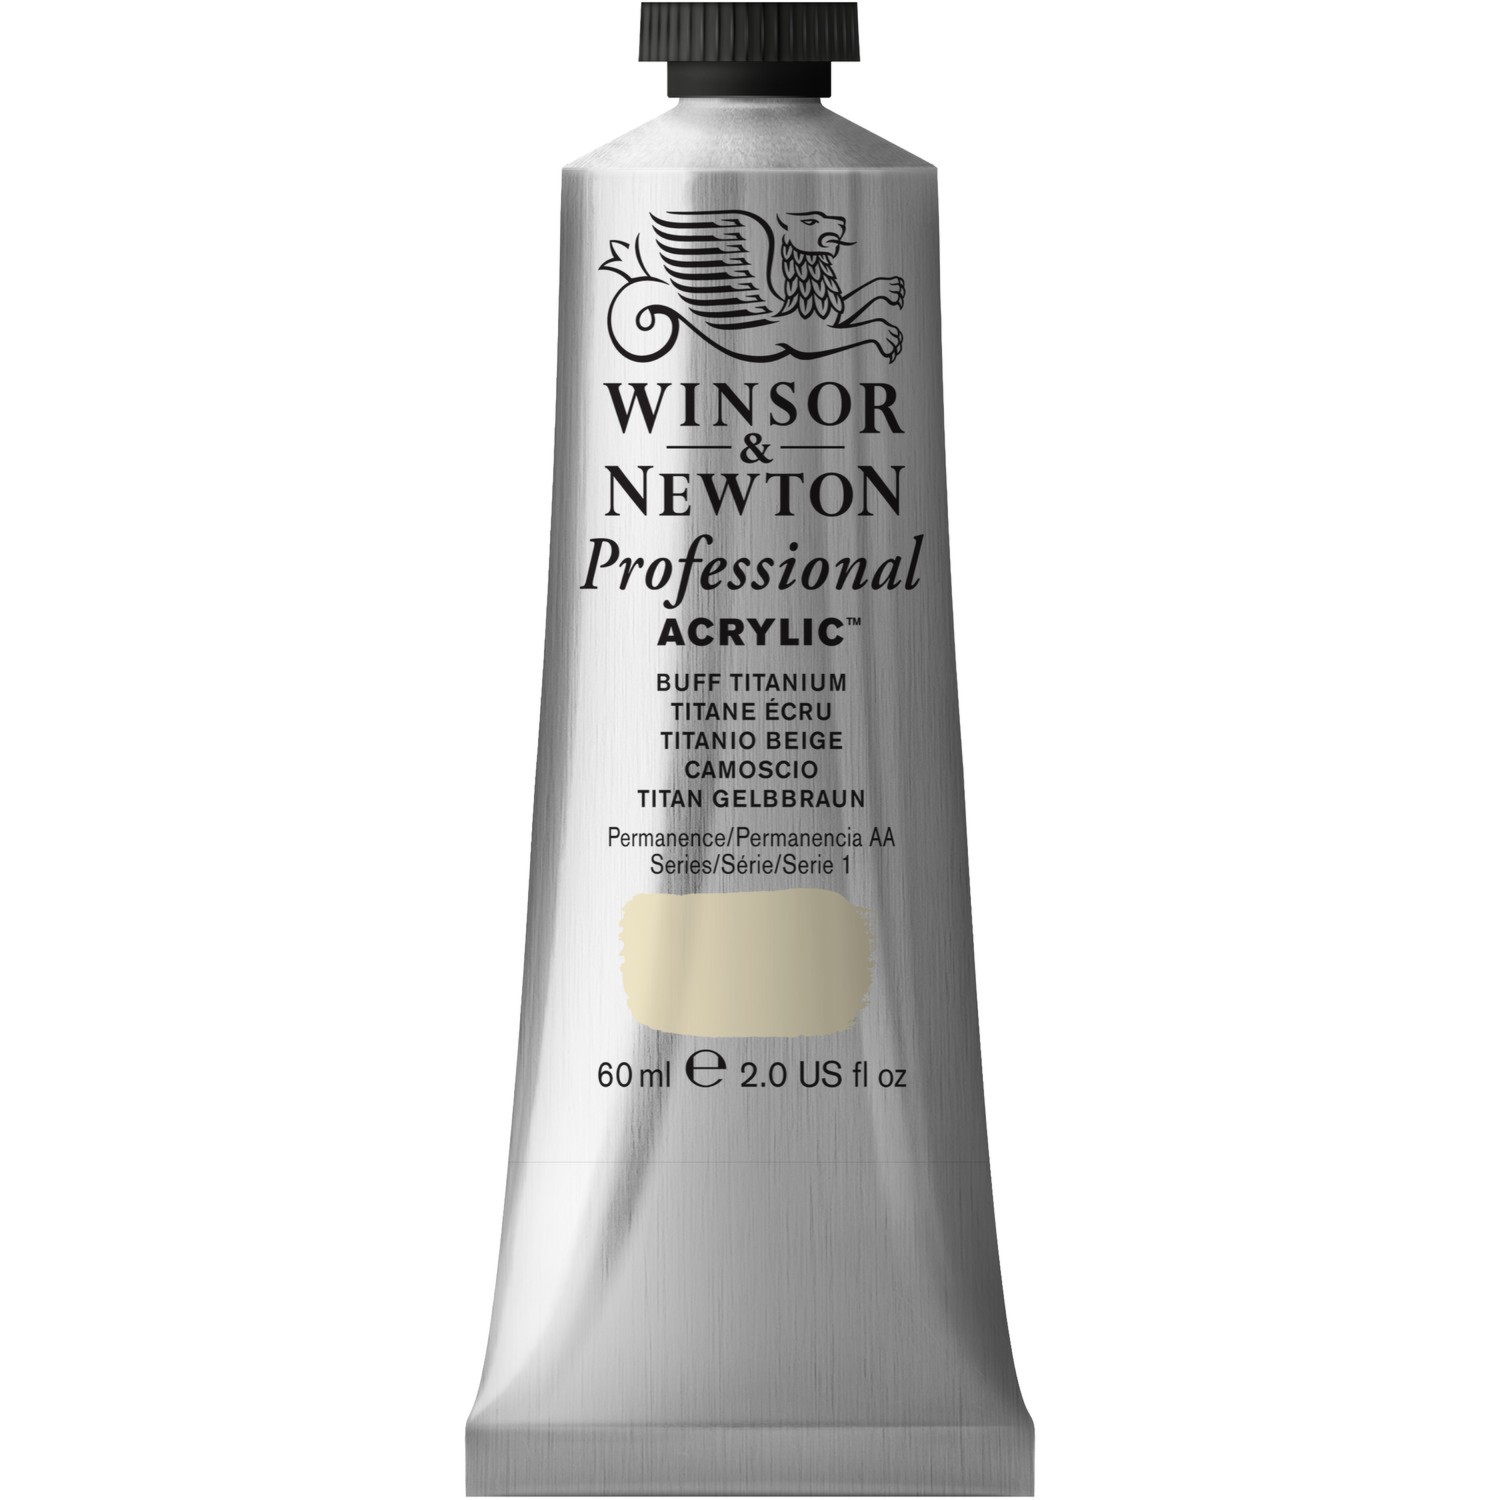 Winsor and Newton 60ml Professional Acrylic Paint - Buff Titanium Image 1